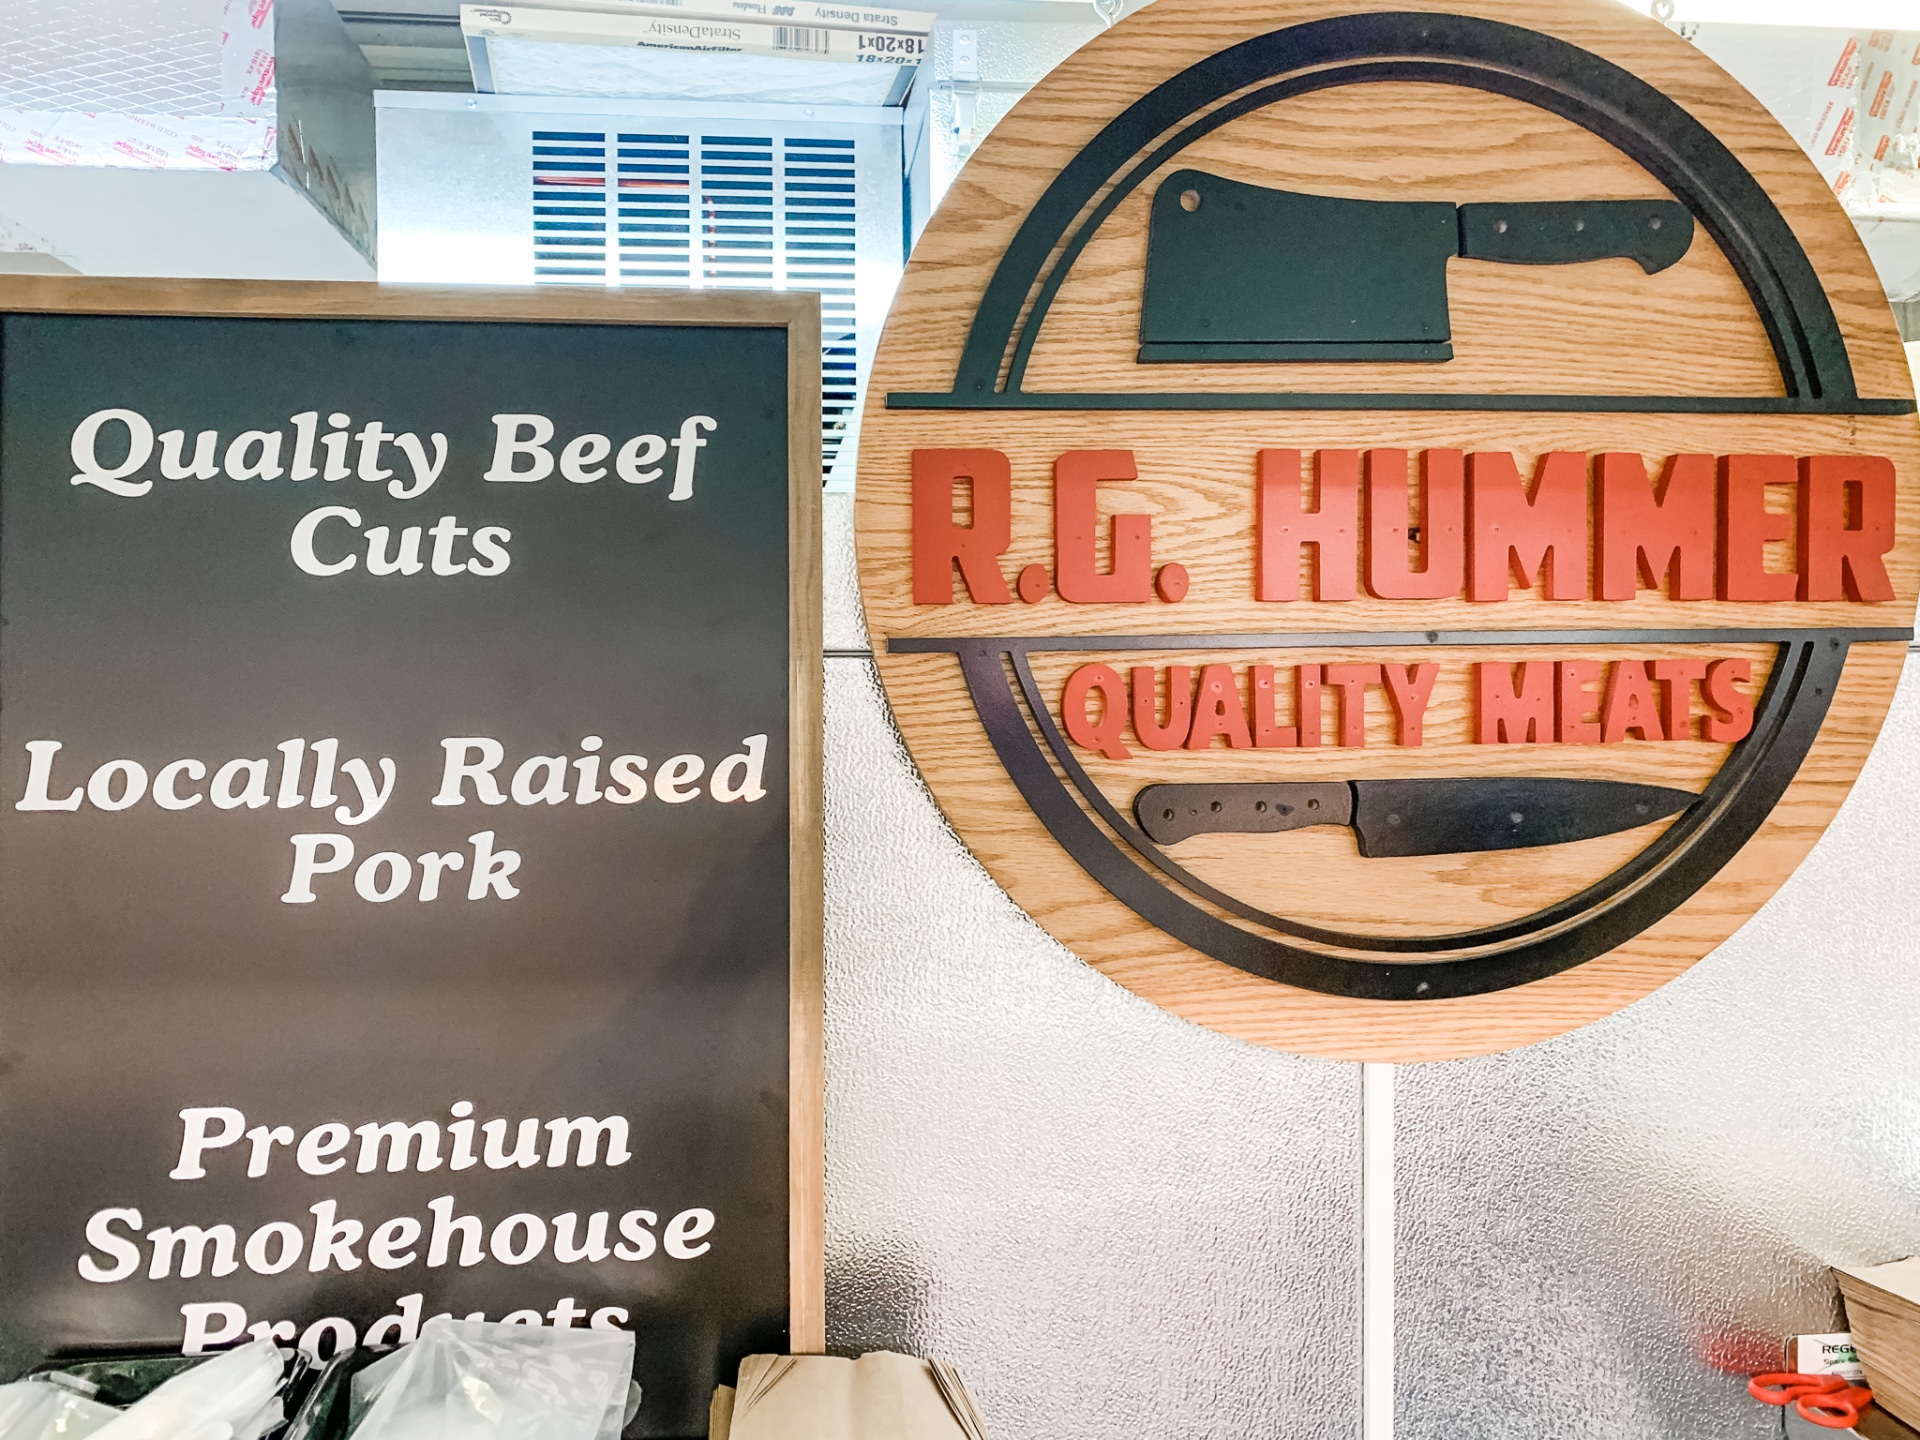 R.G. Hummer Meats